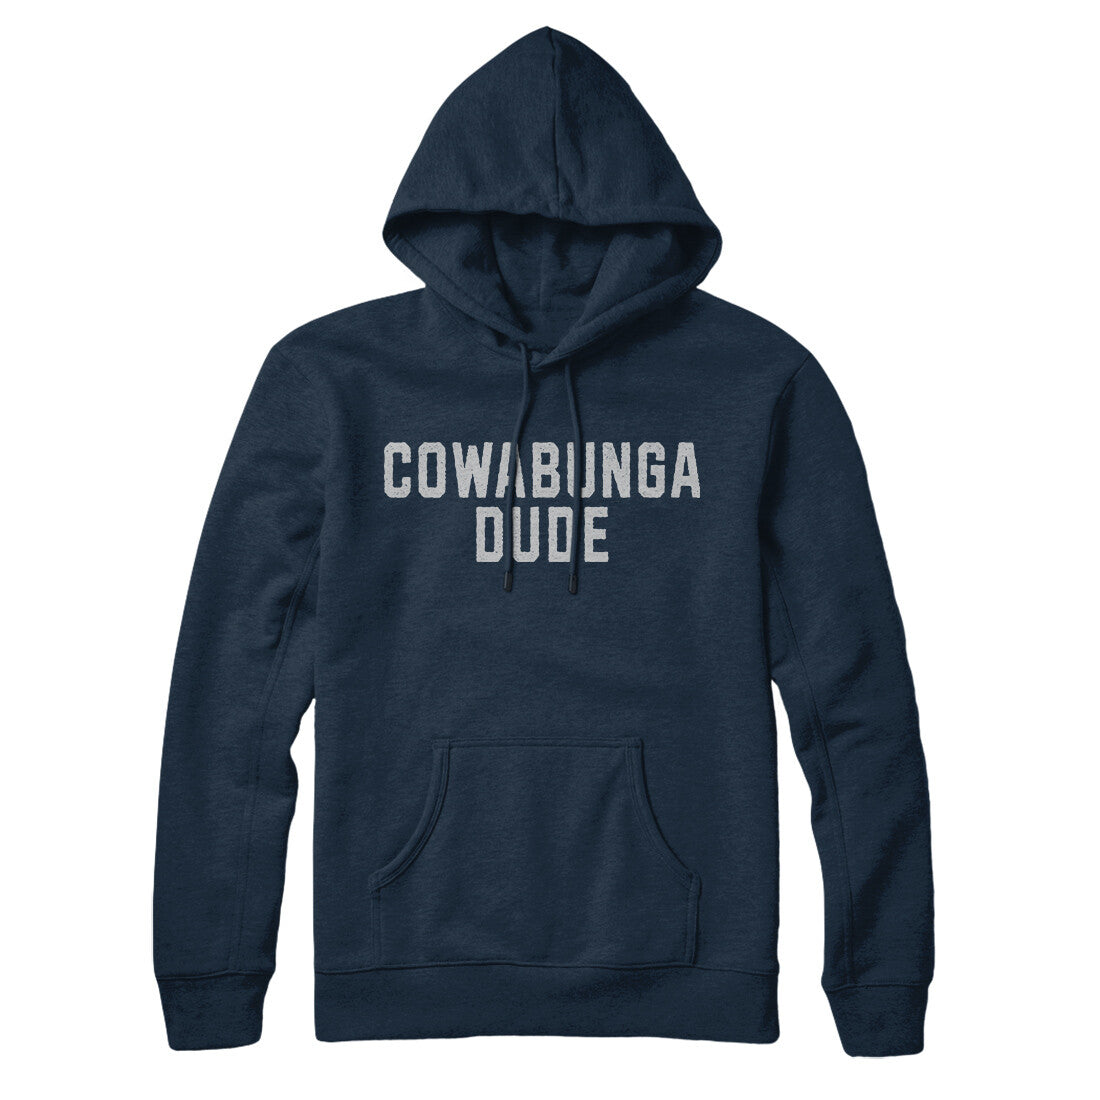 Cowabunga Dude in Navy Blue Color